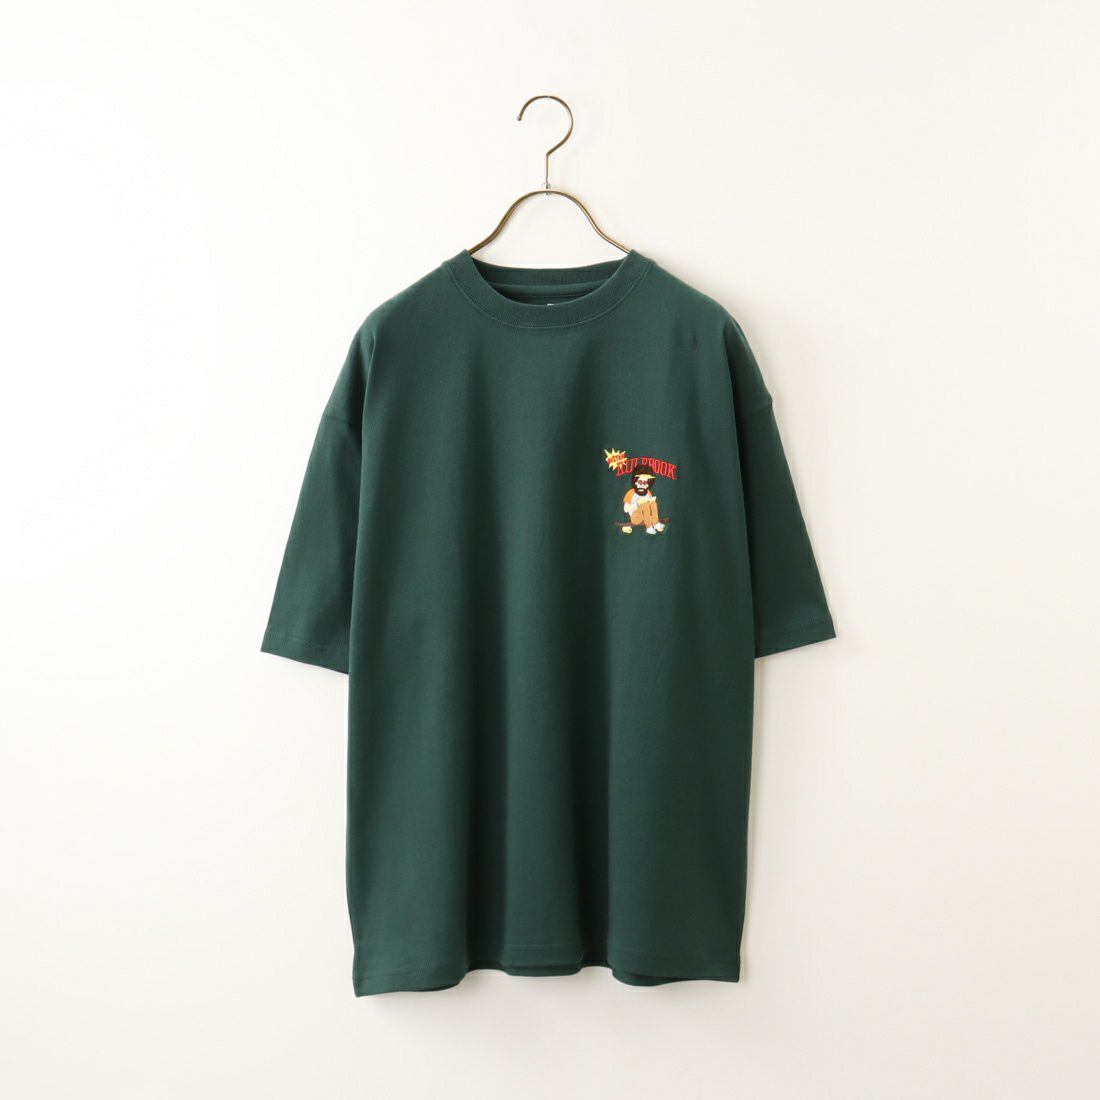 33Degrees [サーティースリーディグリーズ] 髭おじさんサガラ刺繍半袖Tシャツ [TDR-232-056] F GREEN